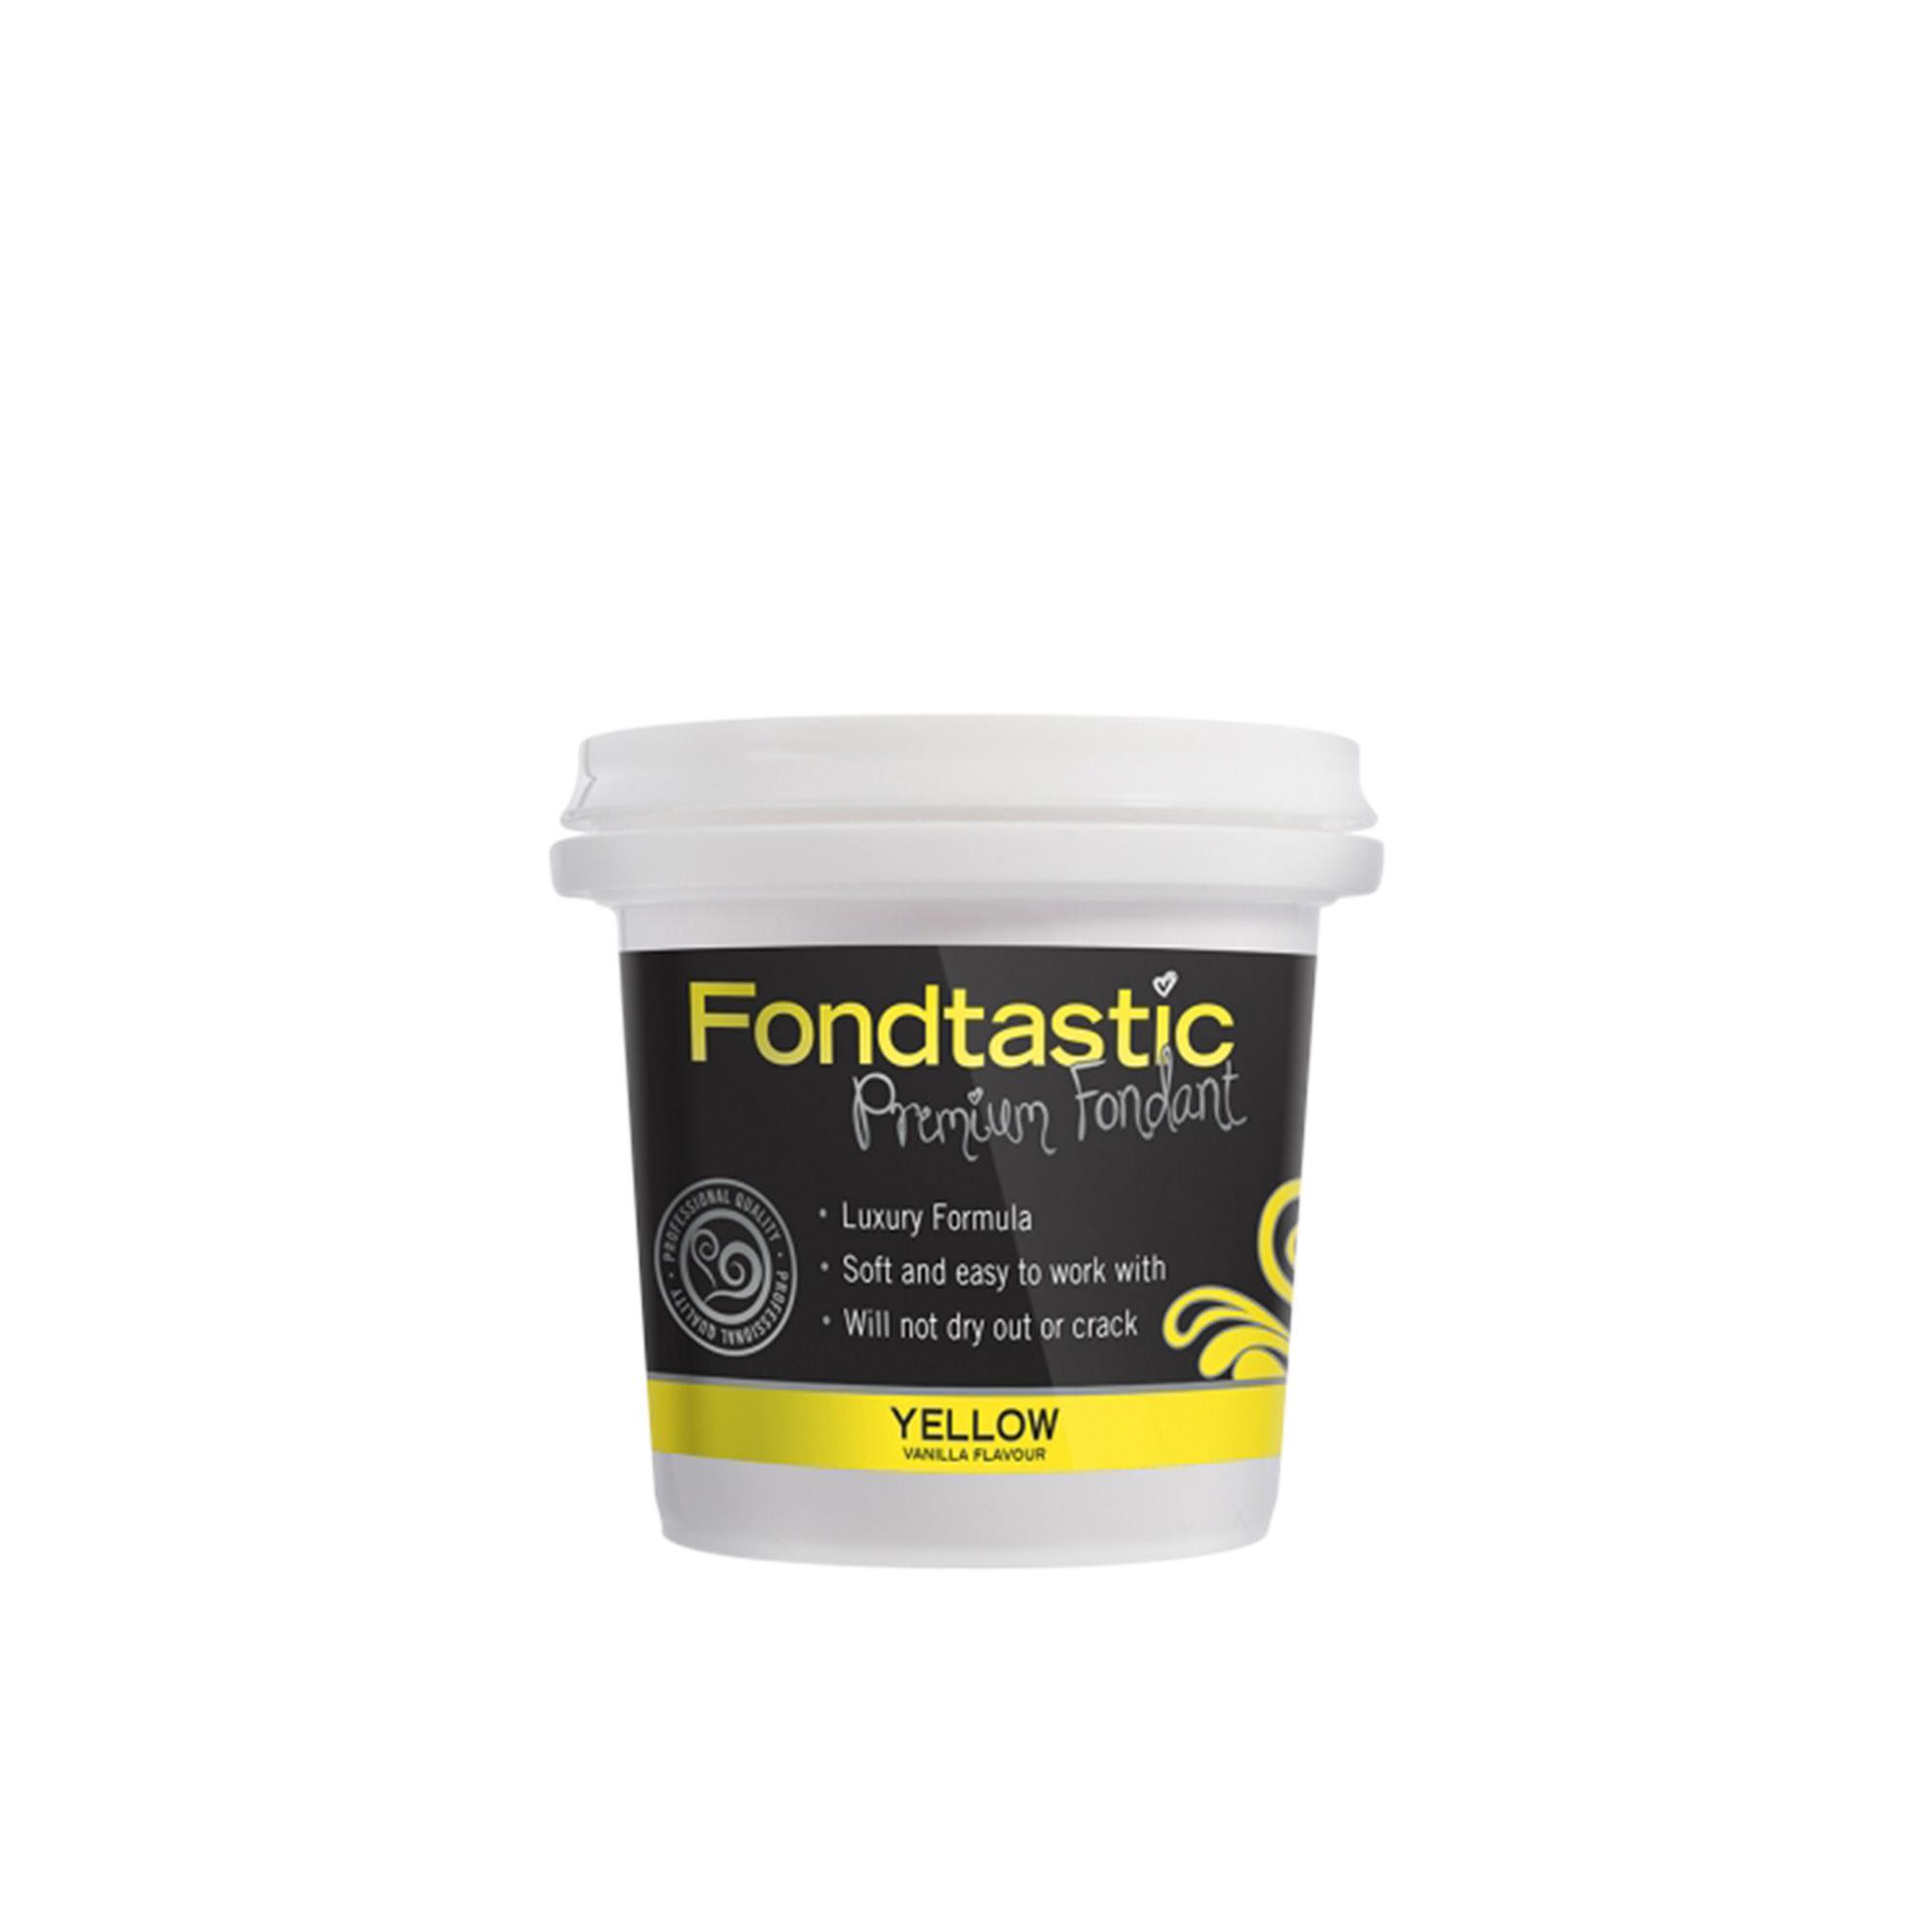 Fondtastic Premium Rolled Fondant Mini Tub Yellow 225g Image 1